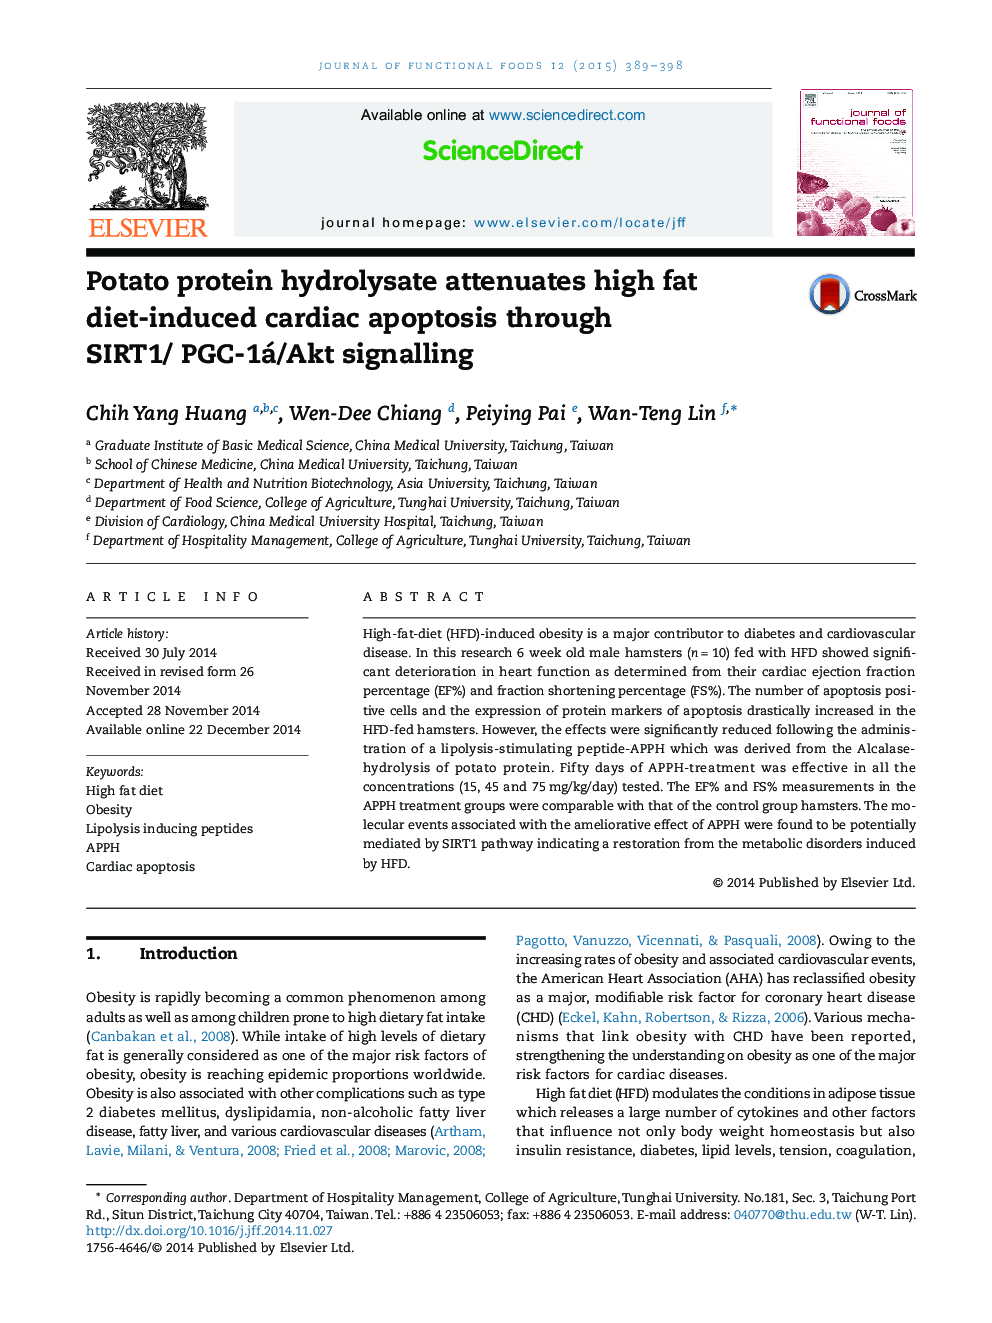 Potato protein hydrolysate attenuates high fat diet-induced cardiac apoptosis through SIRT1/ PGC-1á/Akt signalling